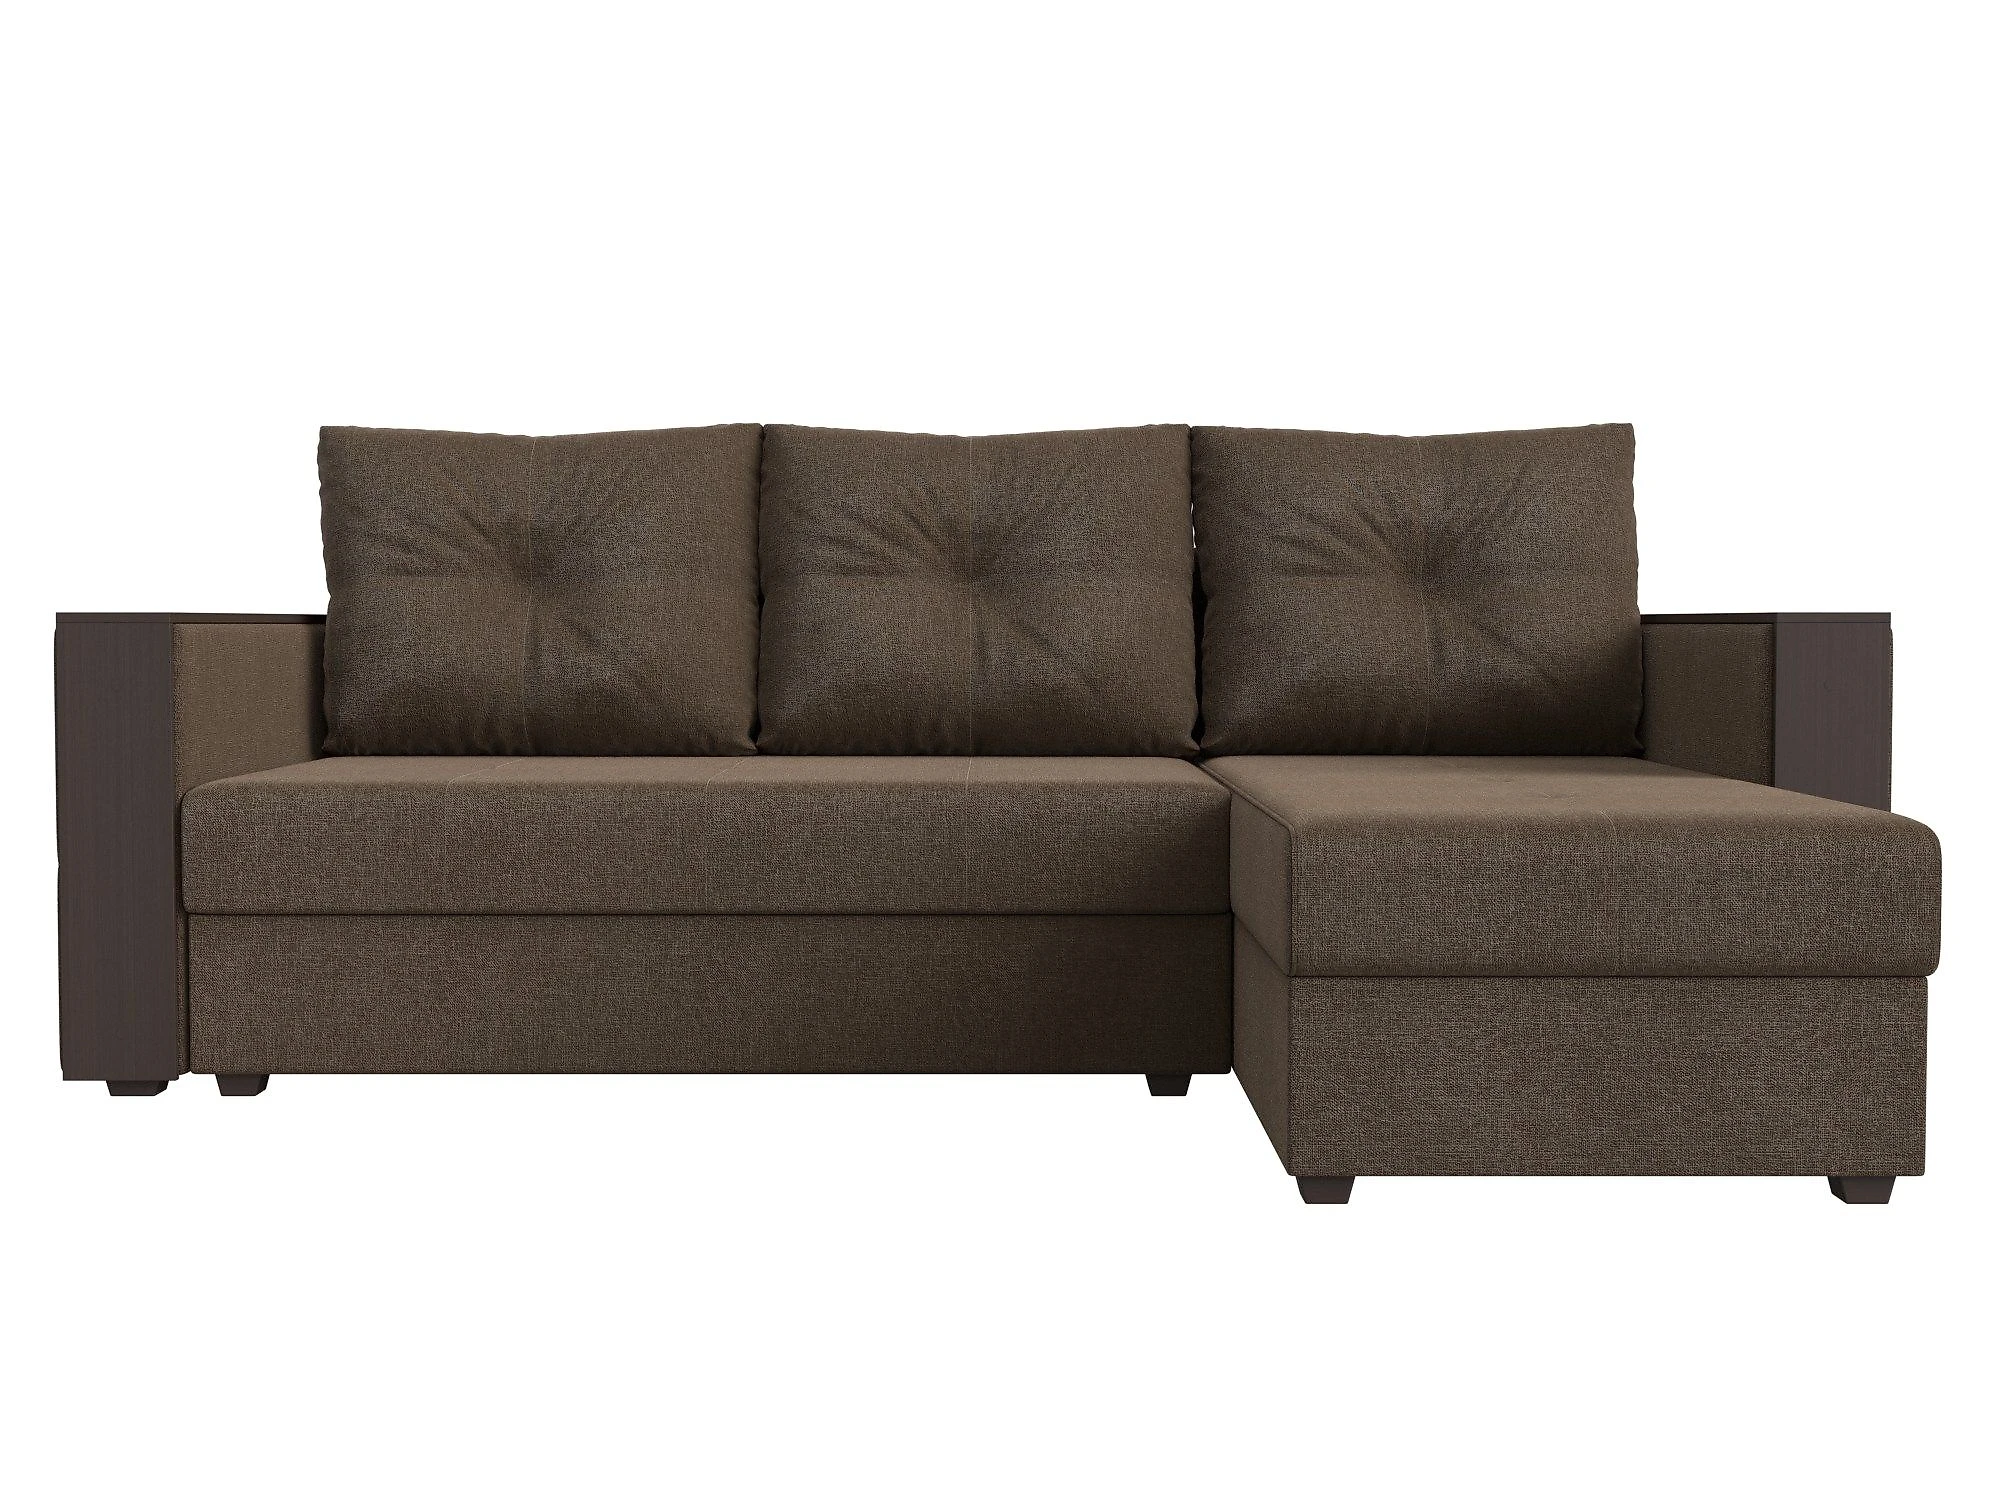  угловой диван из рогожки Валенсия Лайт Кантри Дизайн 1